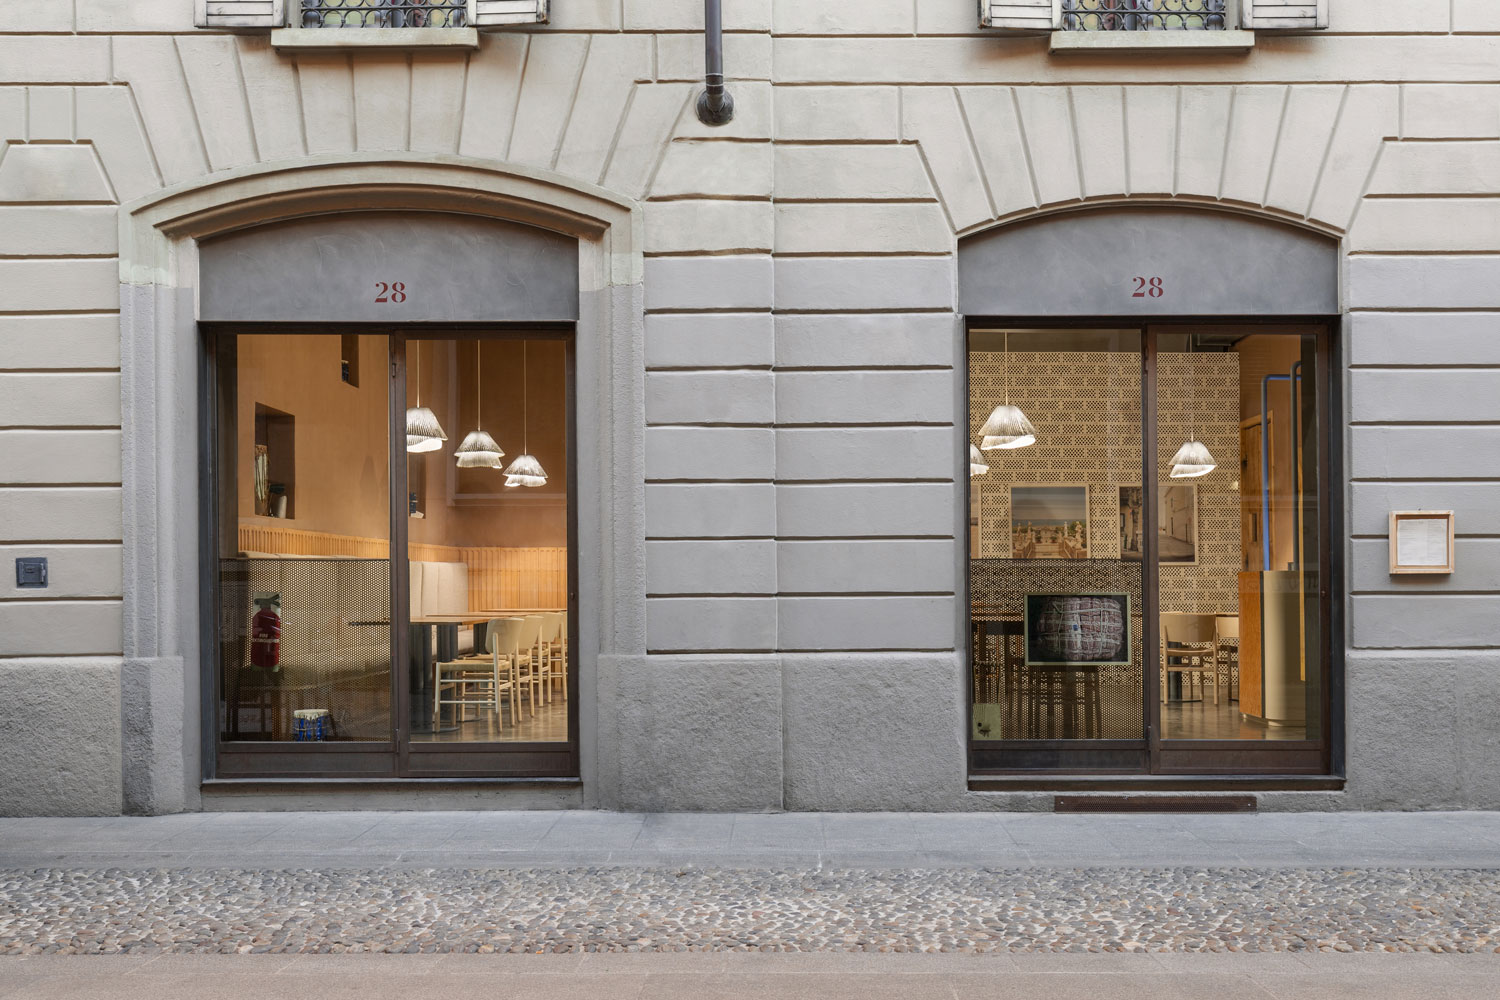 28 Posti Restaurant Renovation in Milan by Cristina Celestino | Yellowtrace